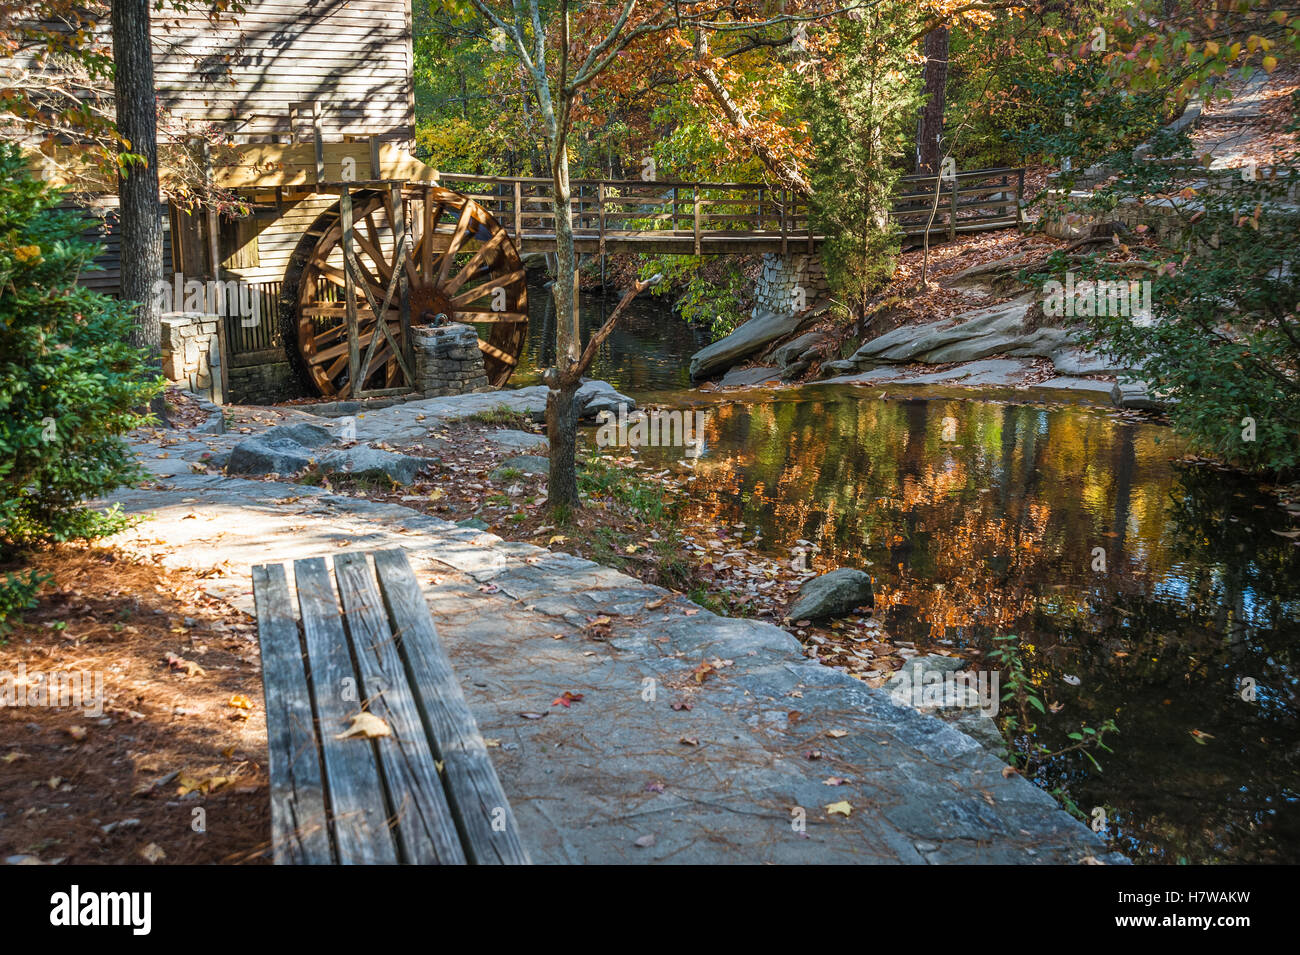 Die Grist Mill mit Wasserrad im Stone Mountain Park in Atlanta, Georgia, USA. Stockfoto